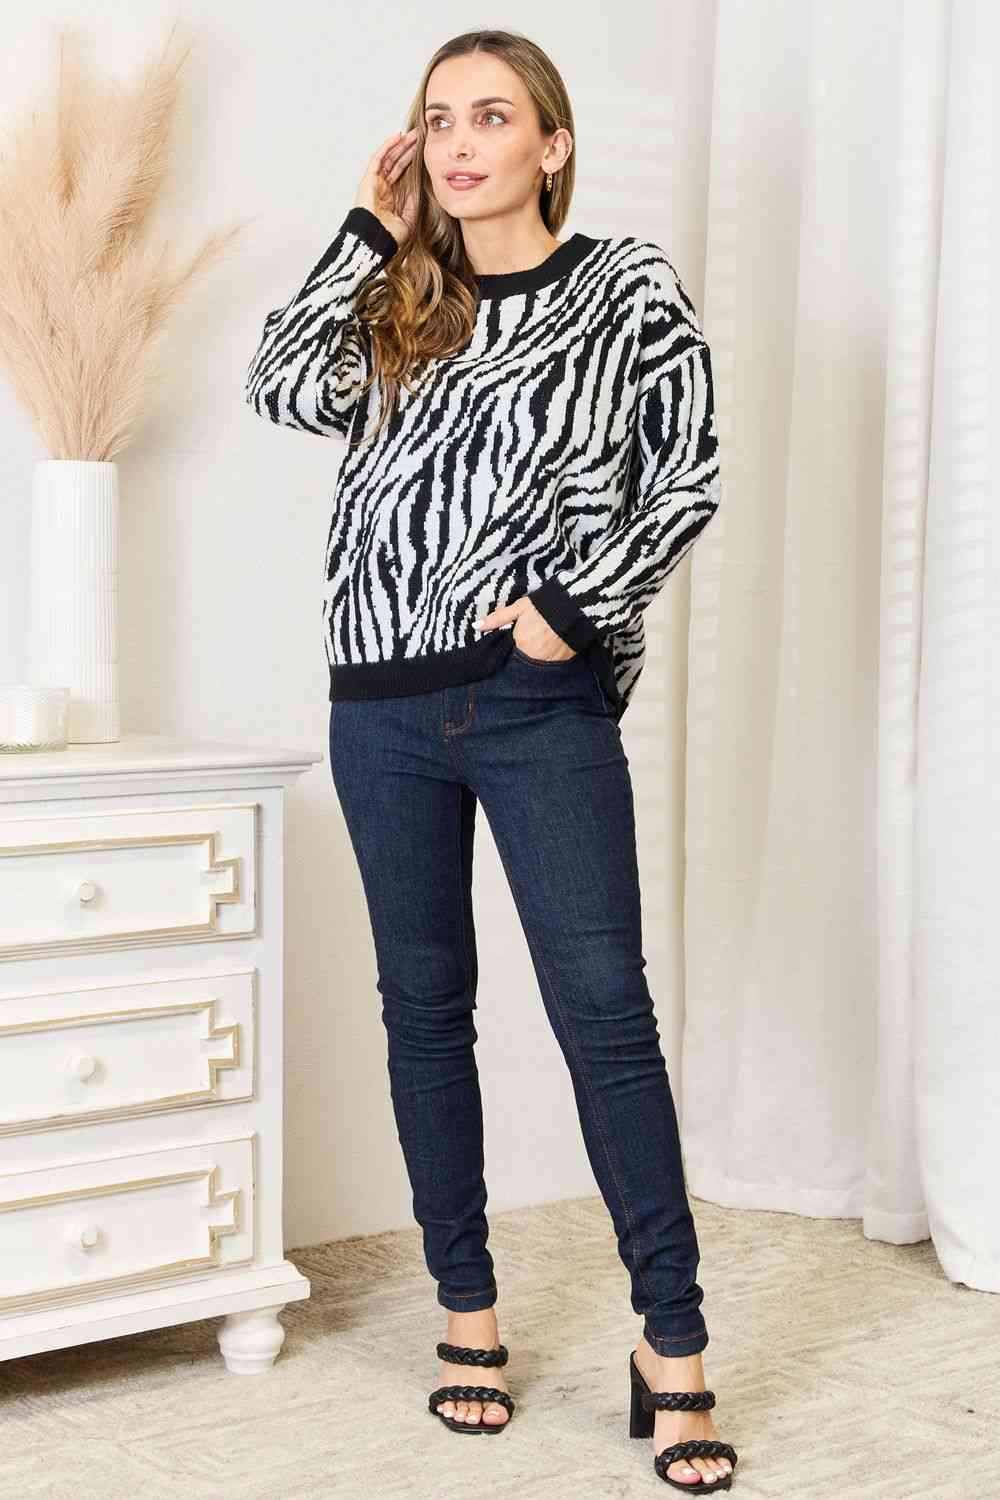 Heimsih Full Size Zebra Print Sweater